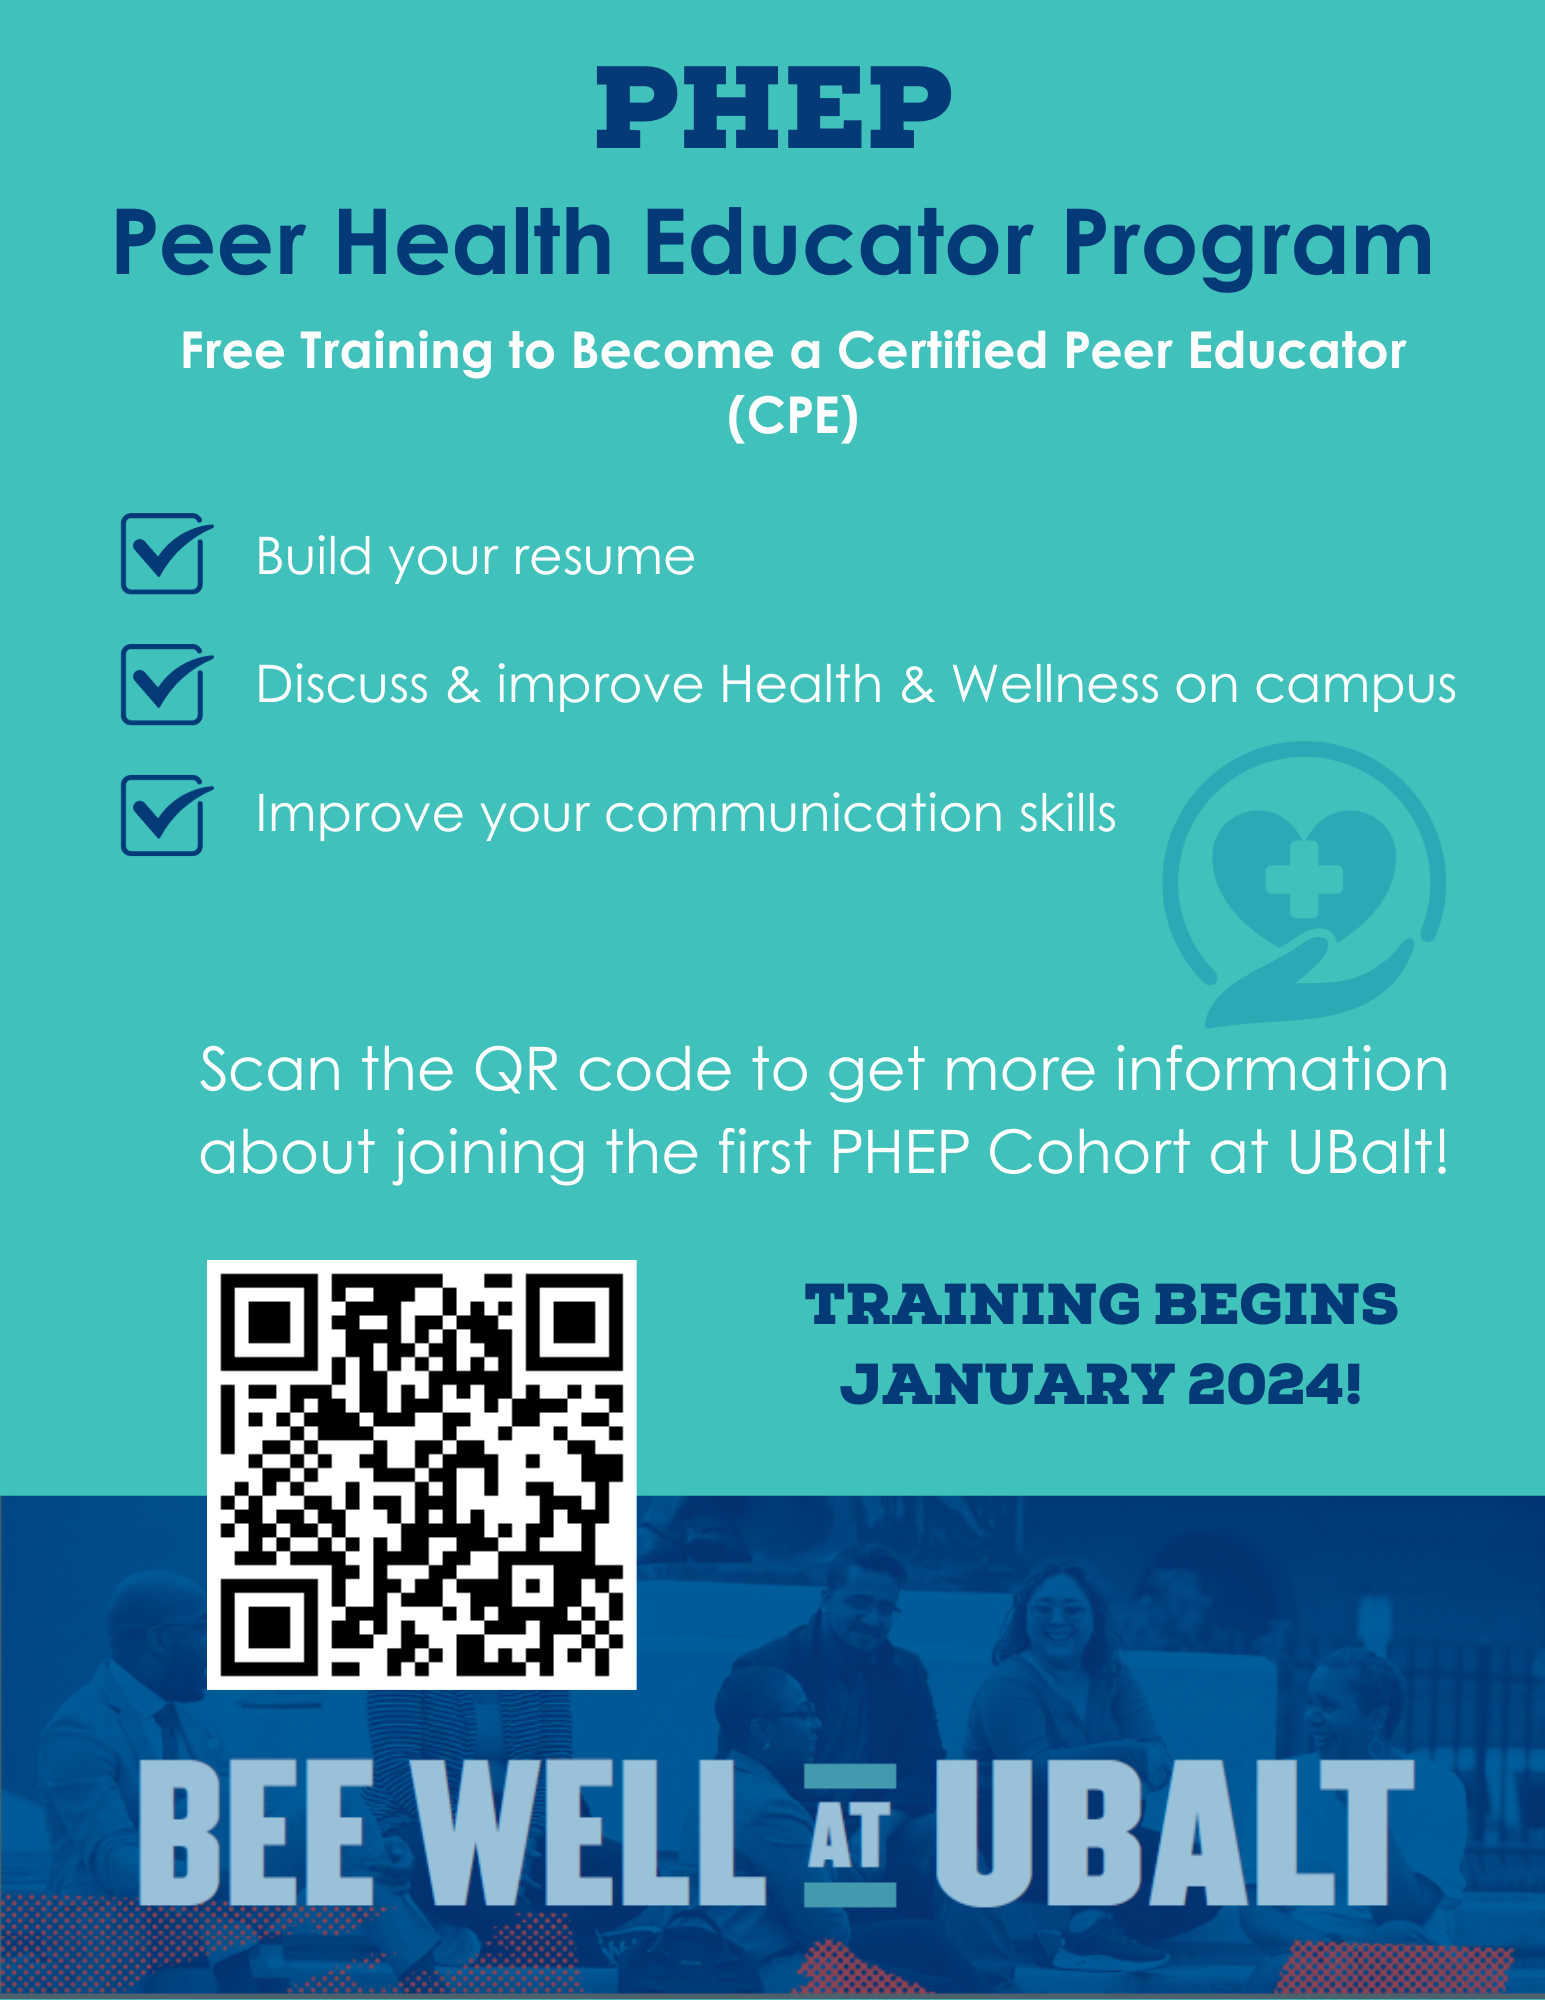 PHEP: Peer Health Educator Program Application